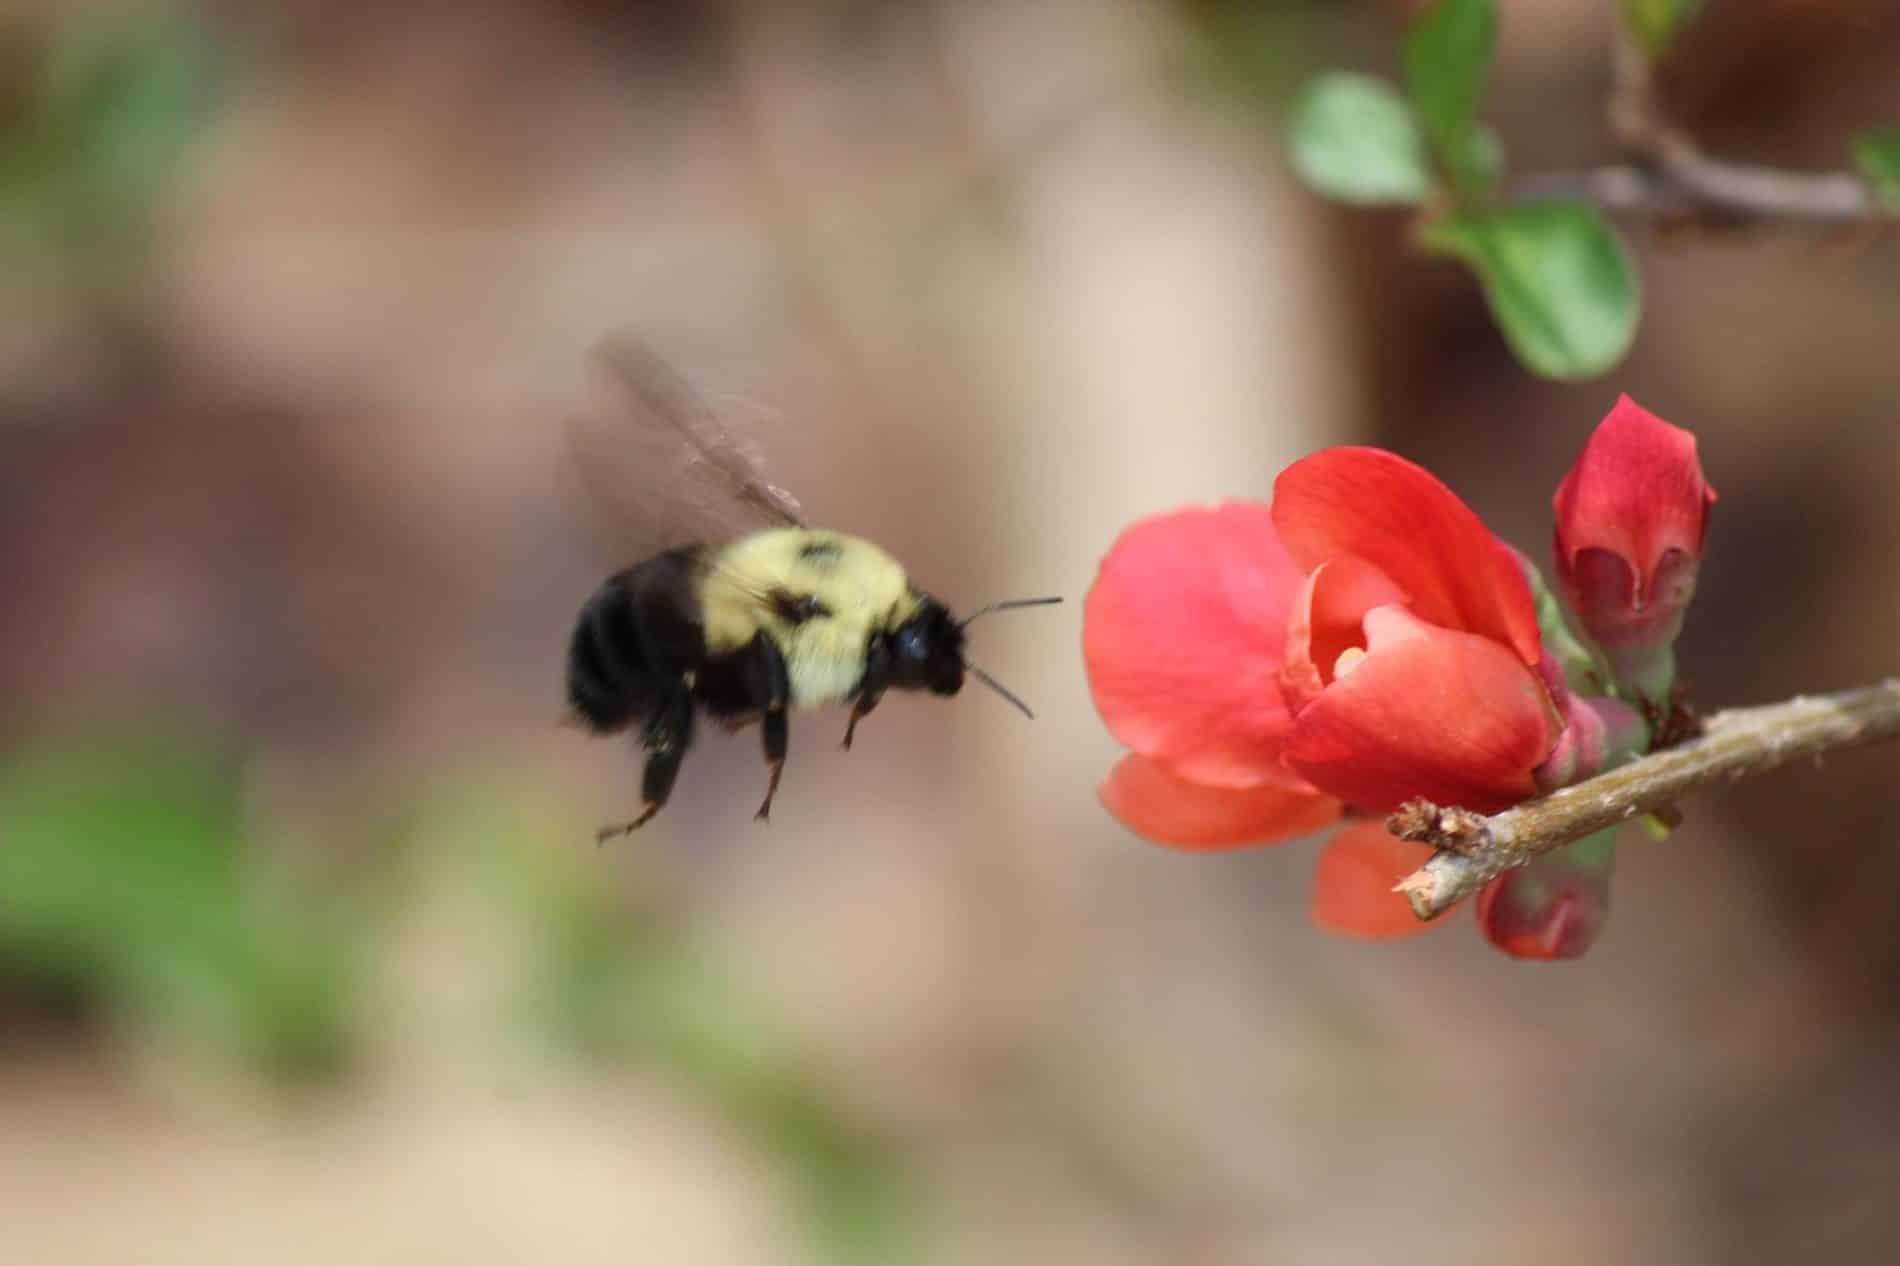 A bumblebee mid flight prepares to land on an orange flower blooming